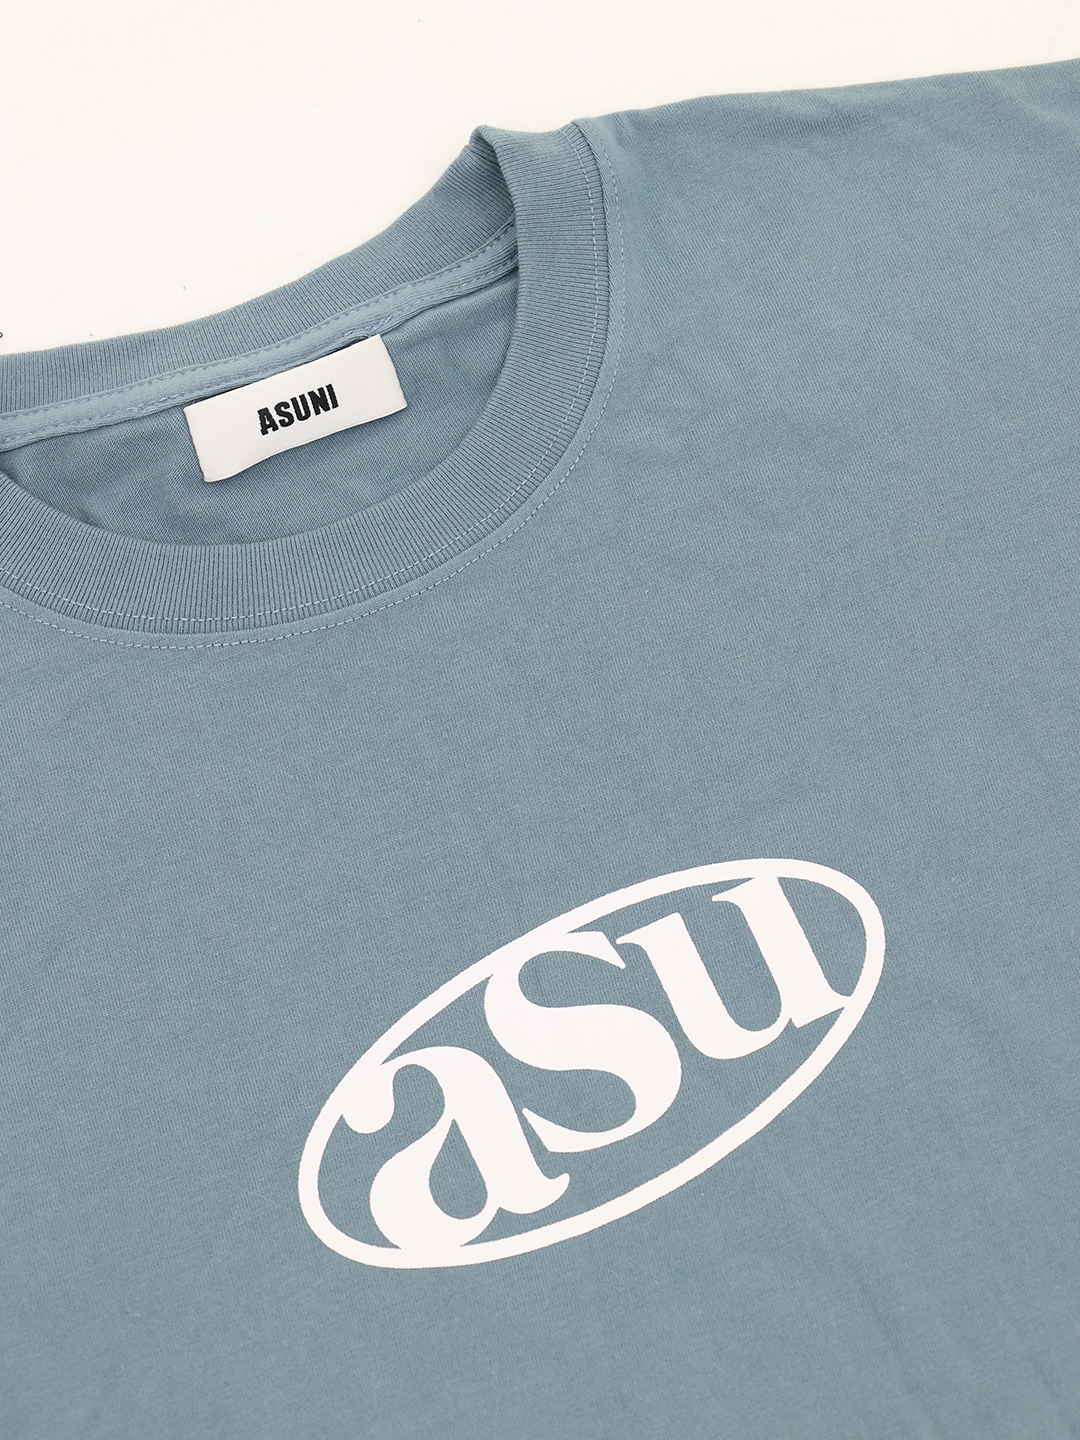 ASUNI ASU LOGO Uni-Sex Printed T-Shirt (Blue)